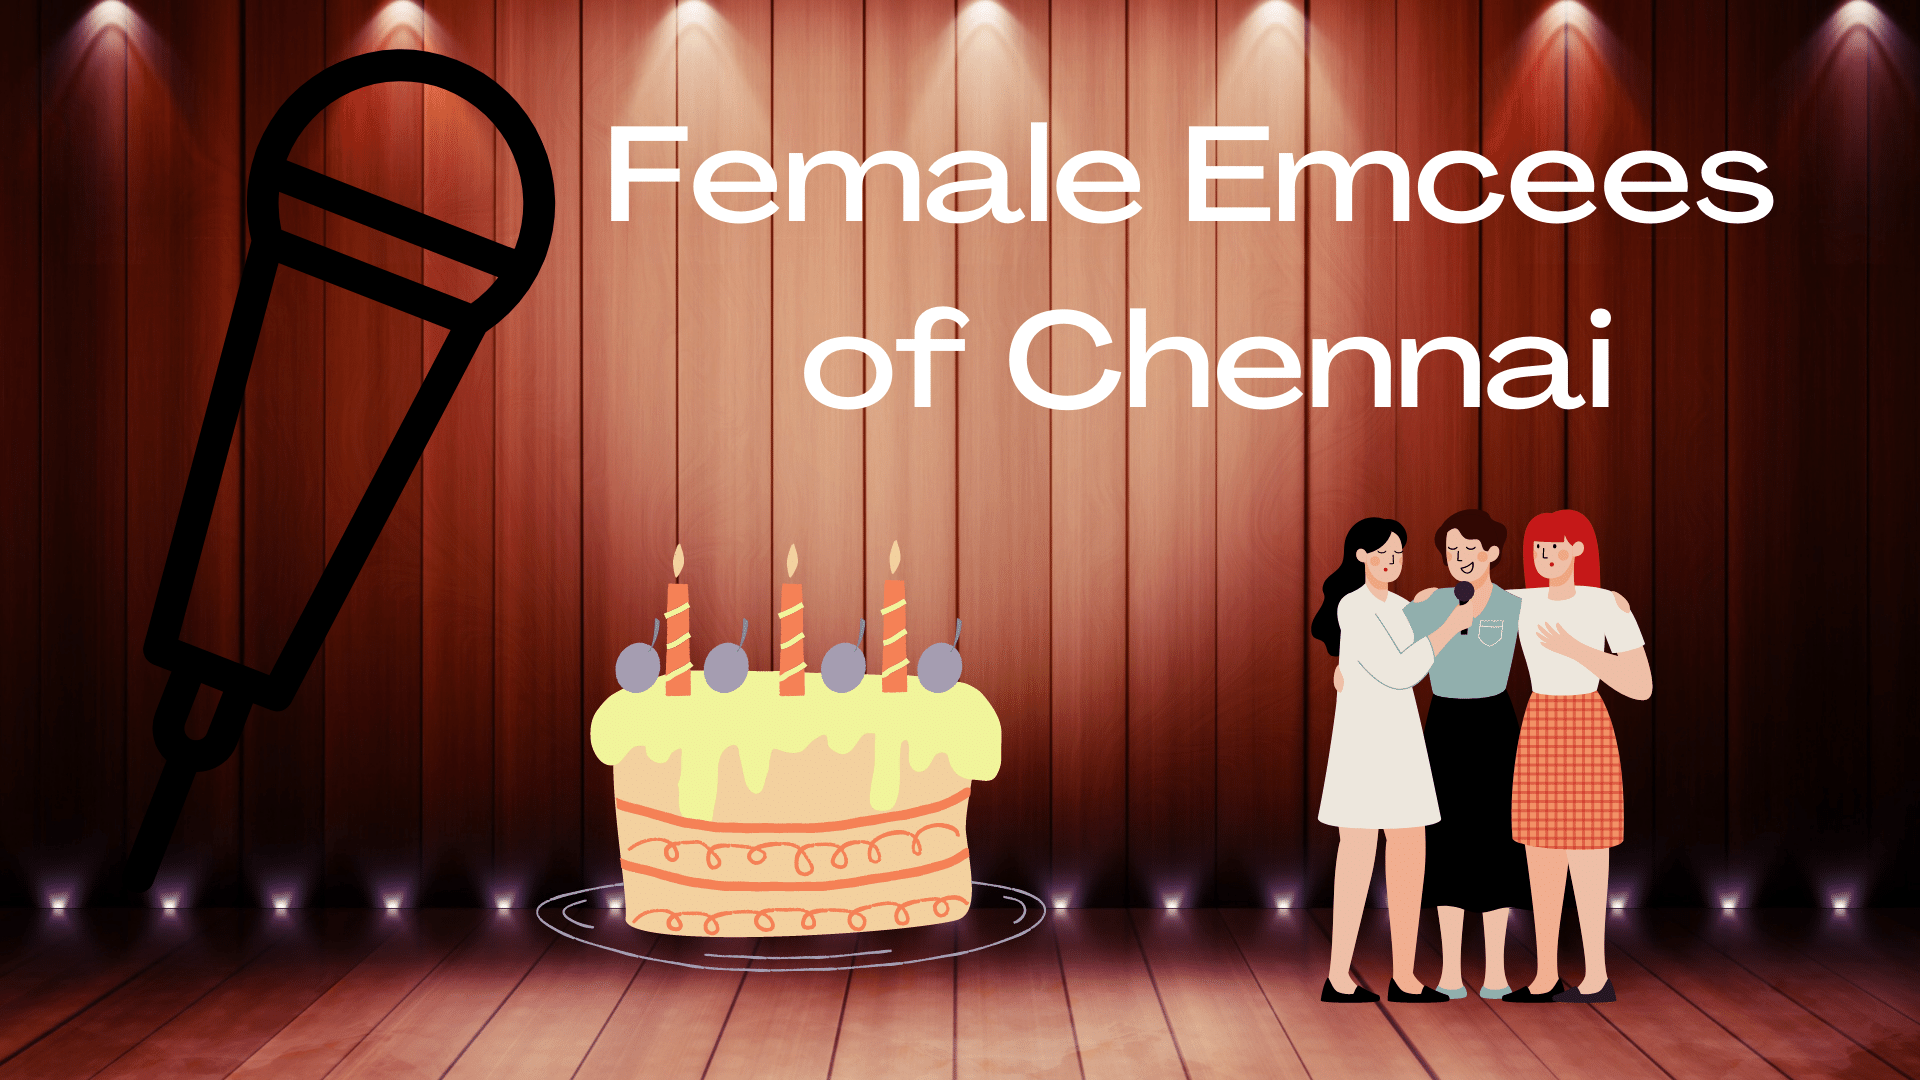 Female Emcees in Chennai Profiles Manged by Chennai Male Anchor Thamizharasan RK